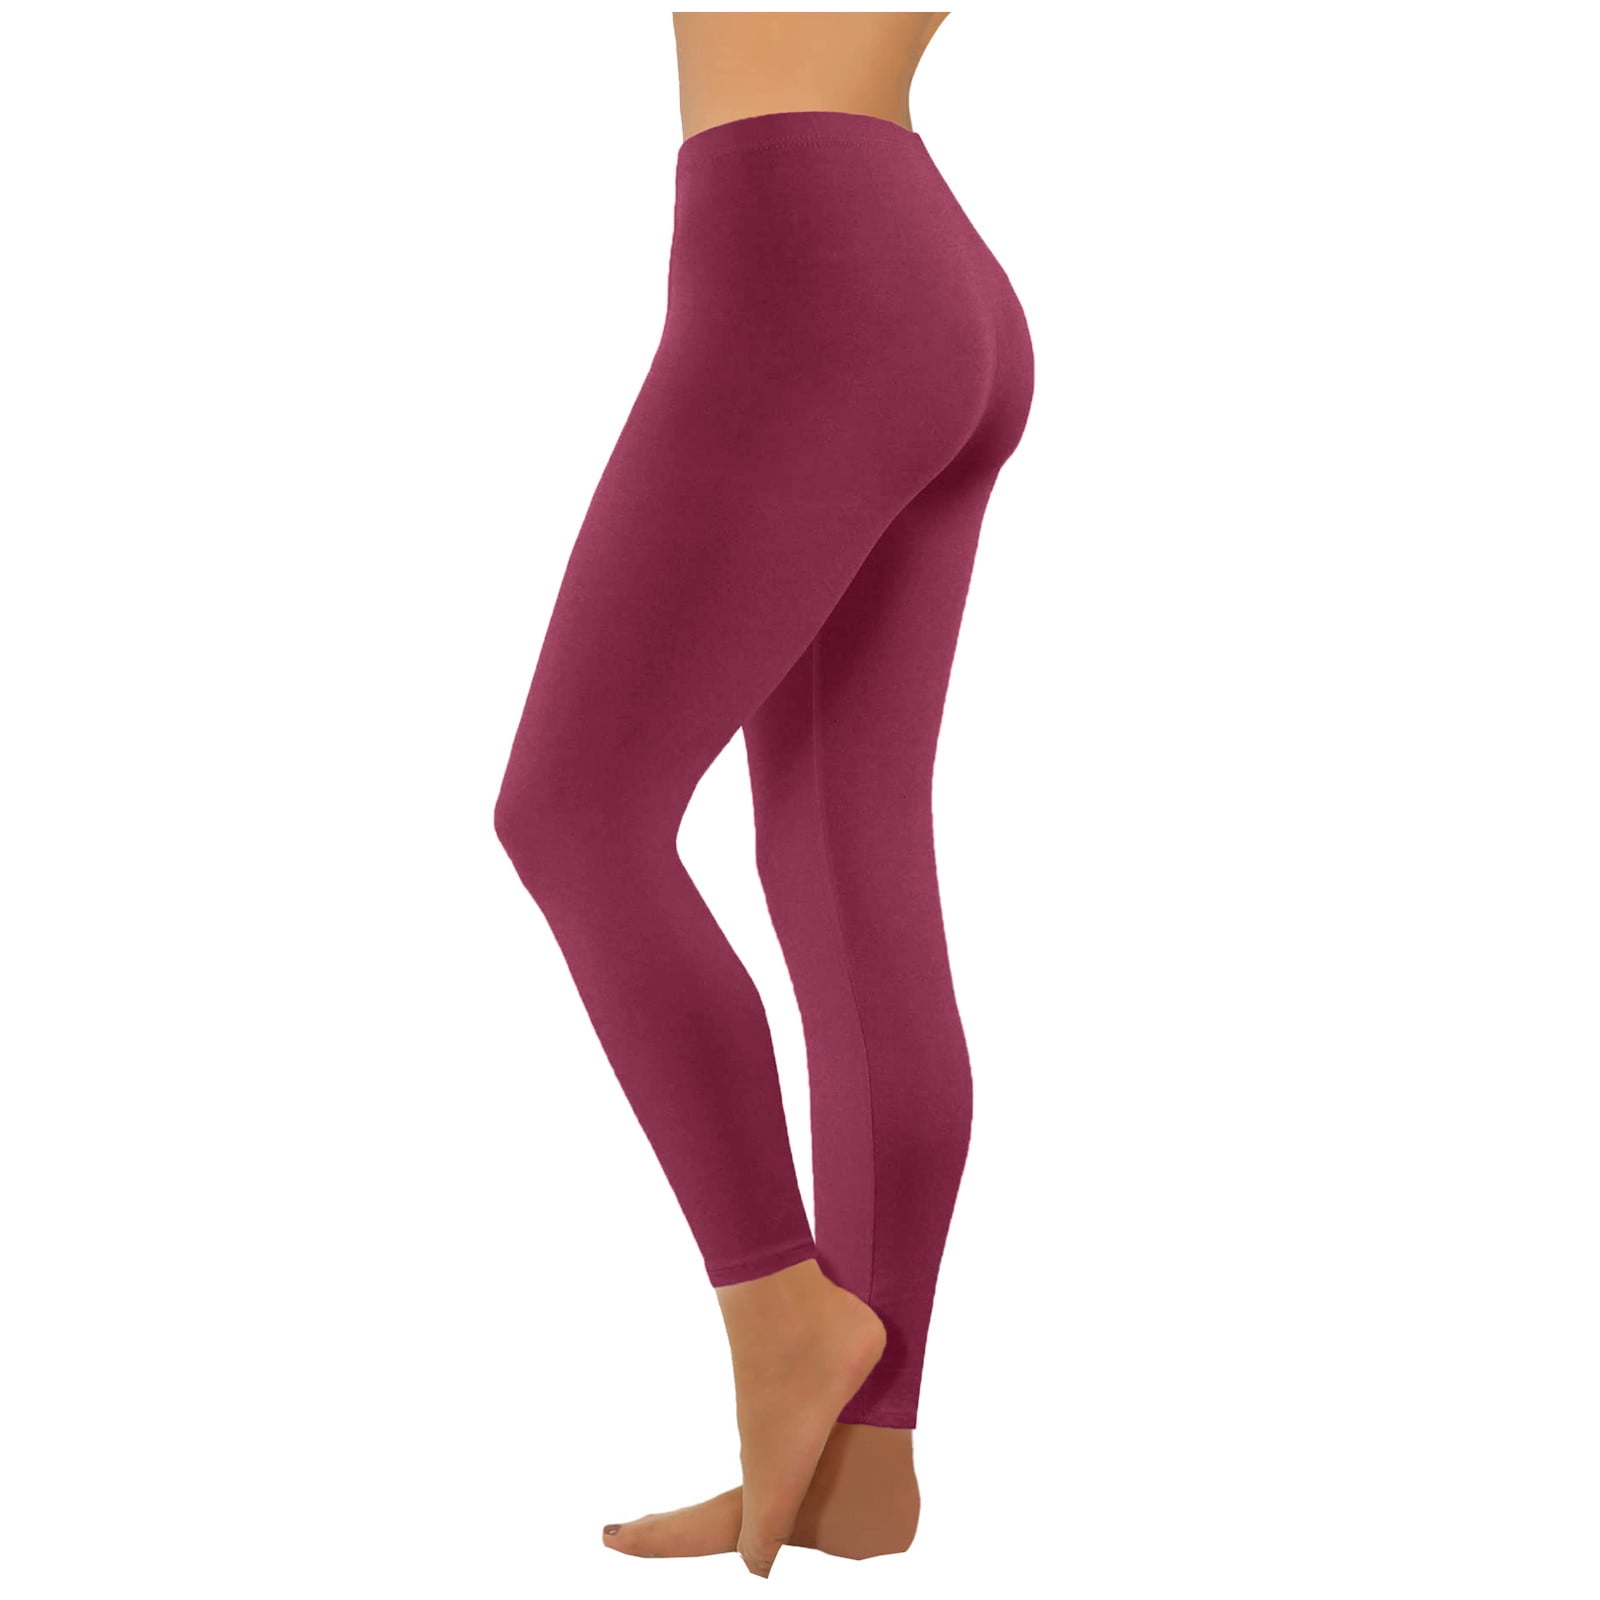 BYOIMUD Women's Yoga Full-Length Pants Savings Solid Color